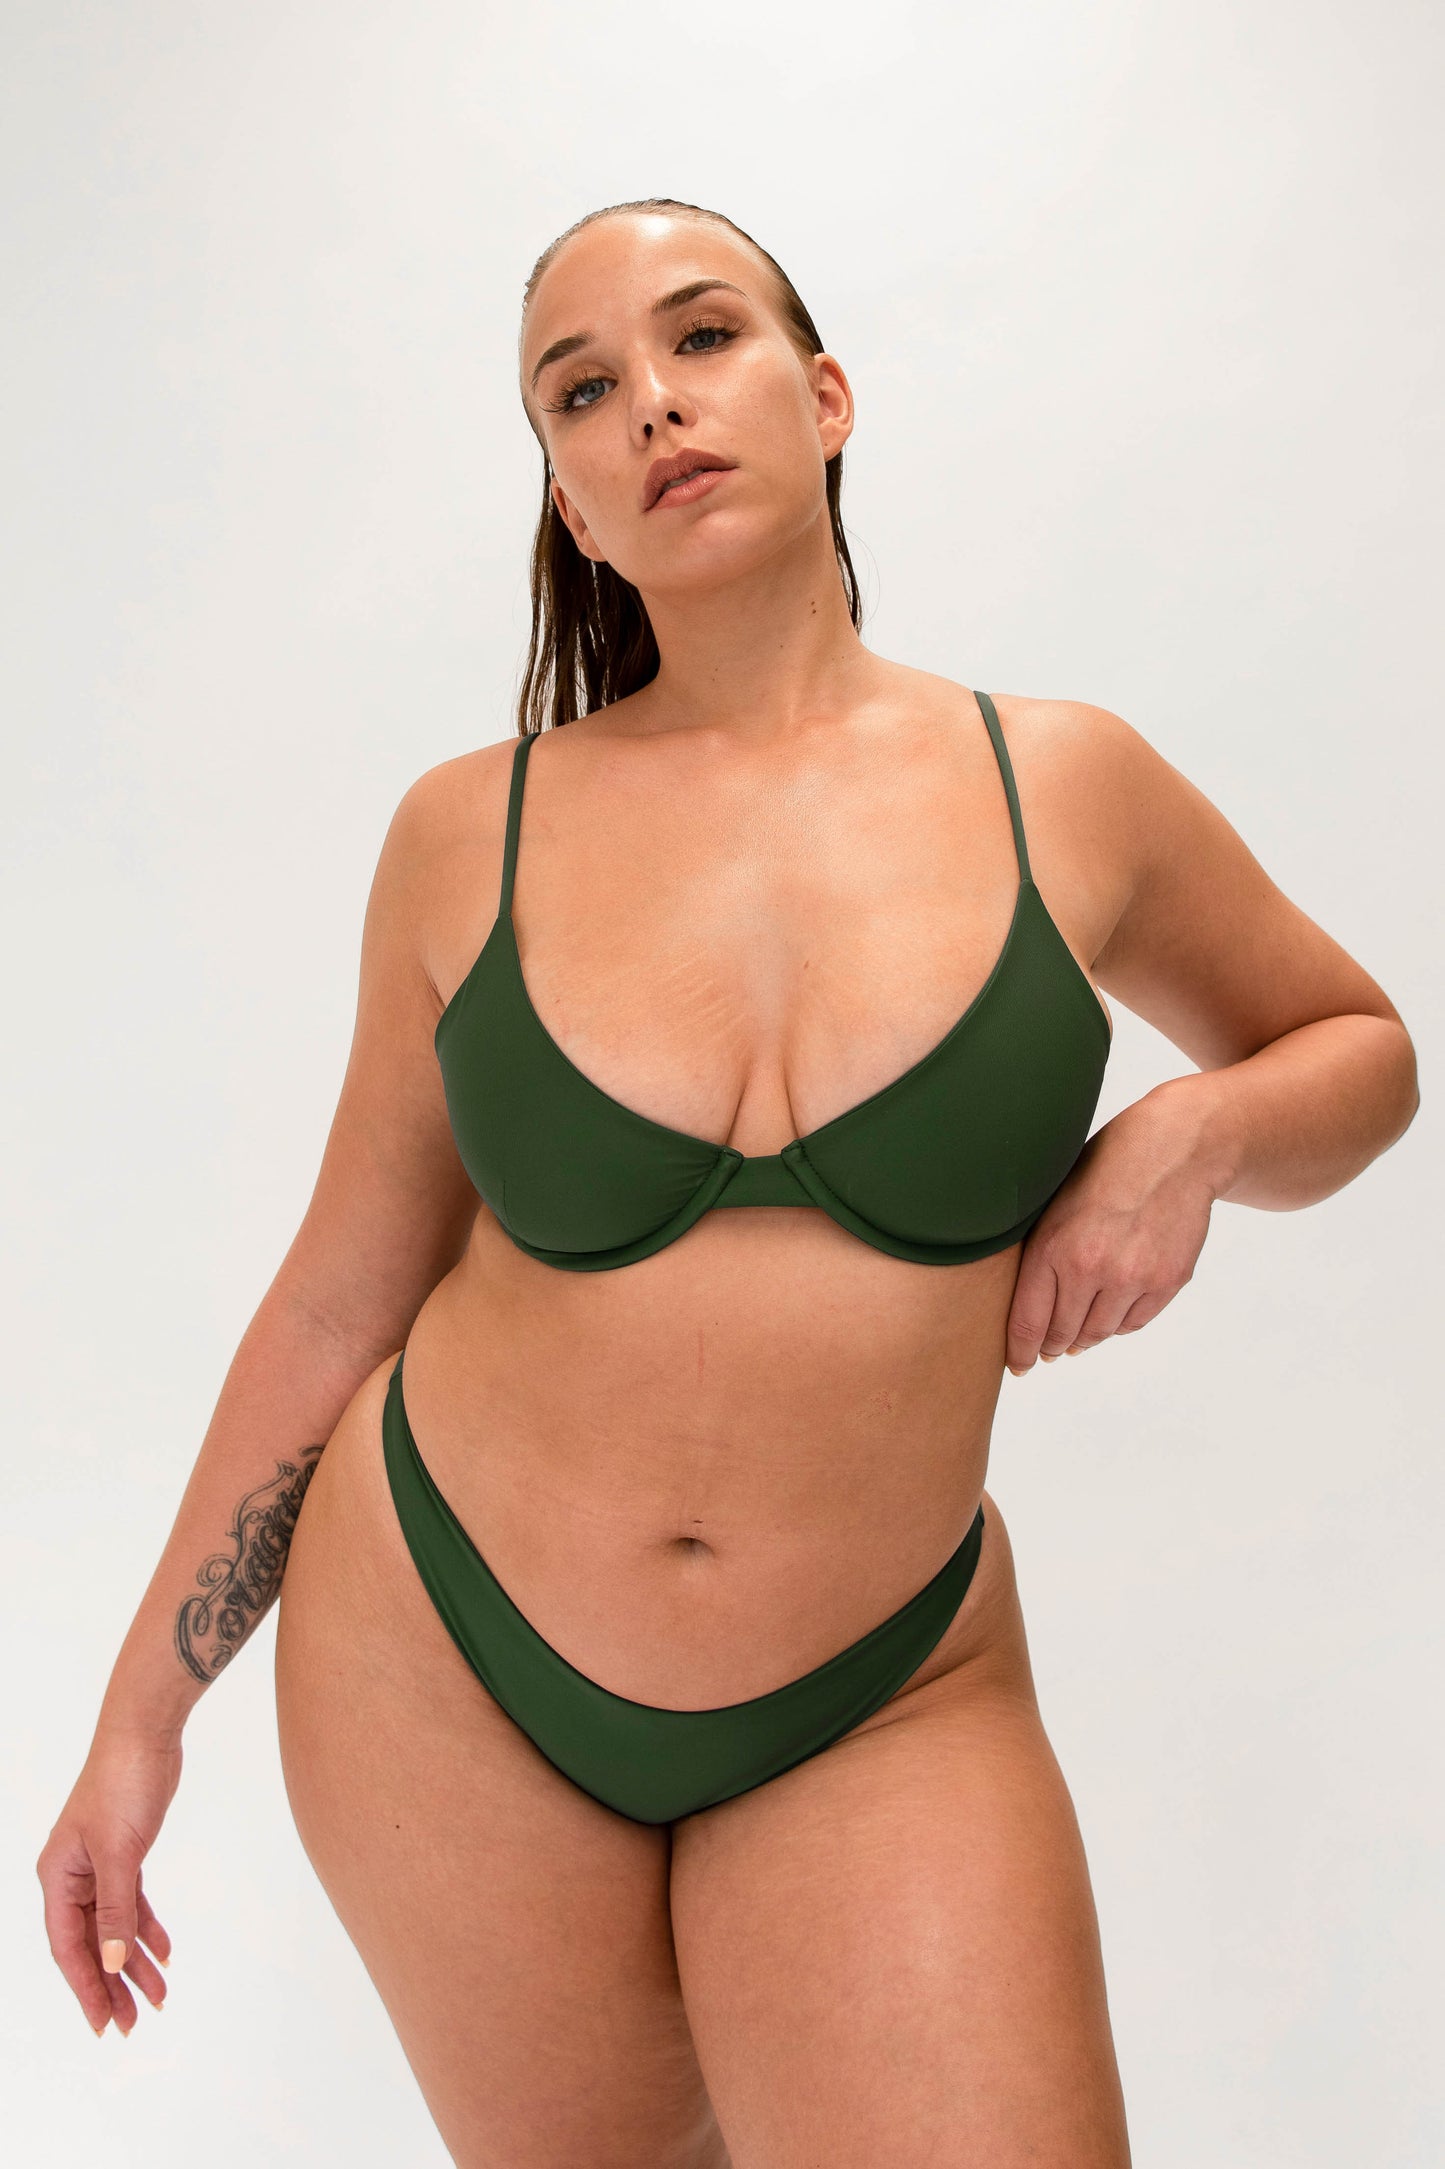 model with green sustainable classy bikini 